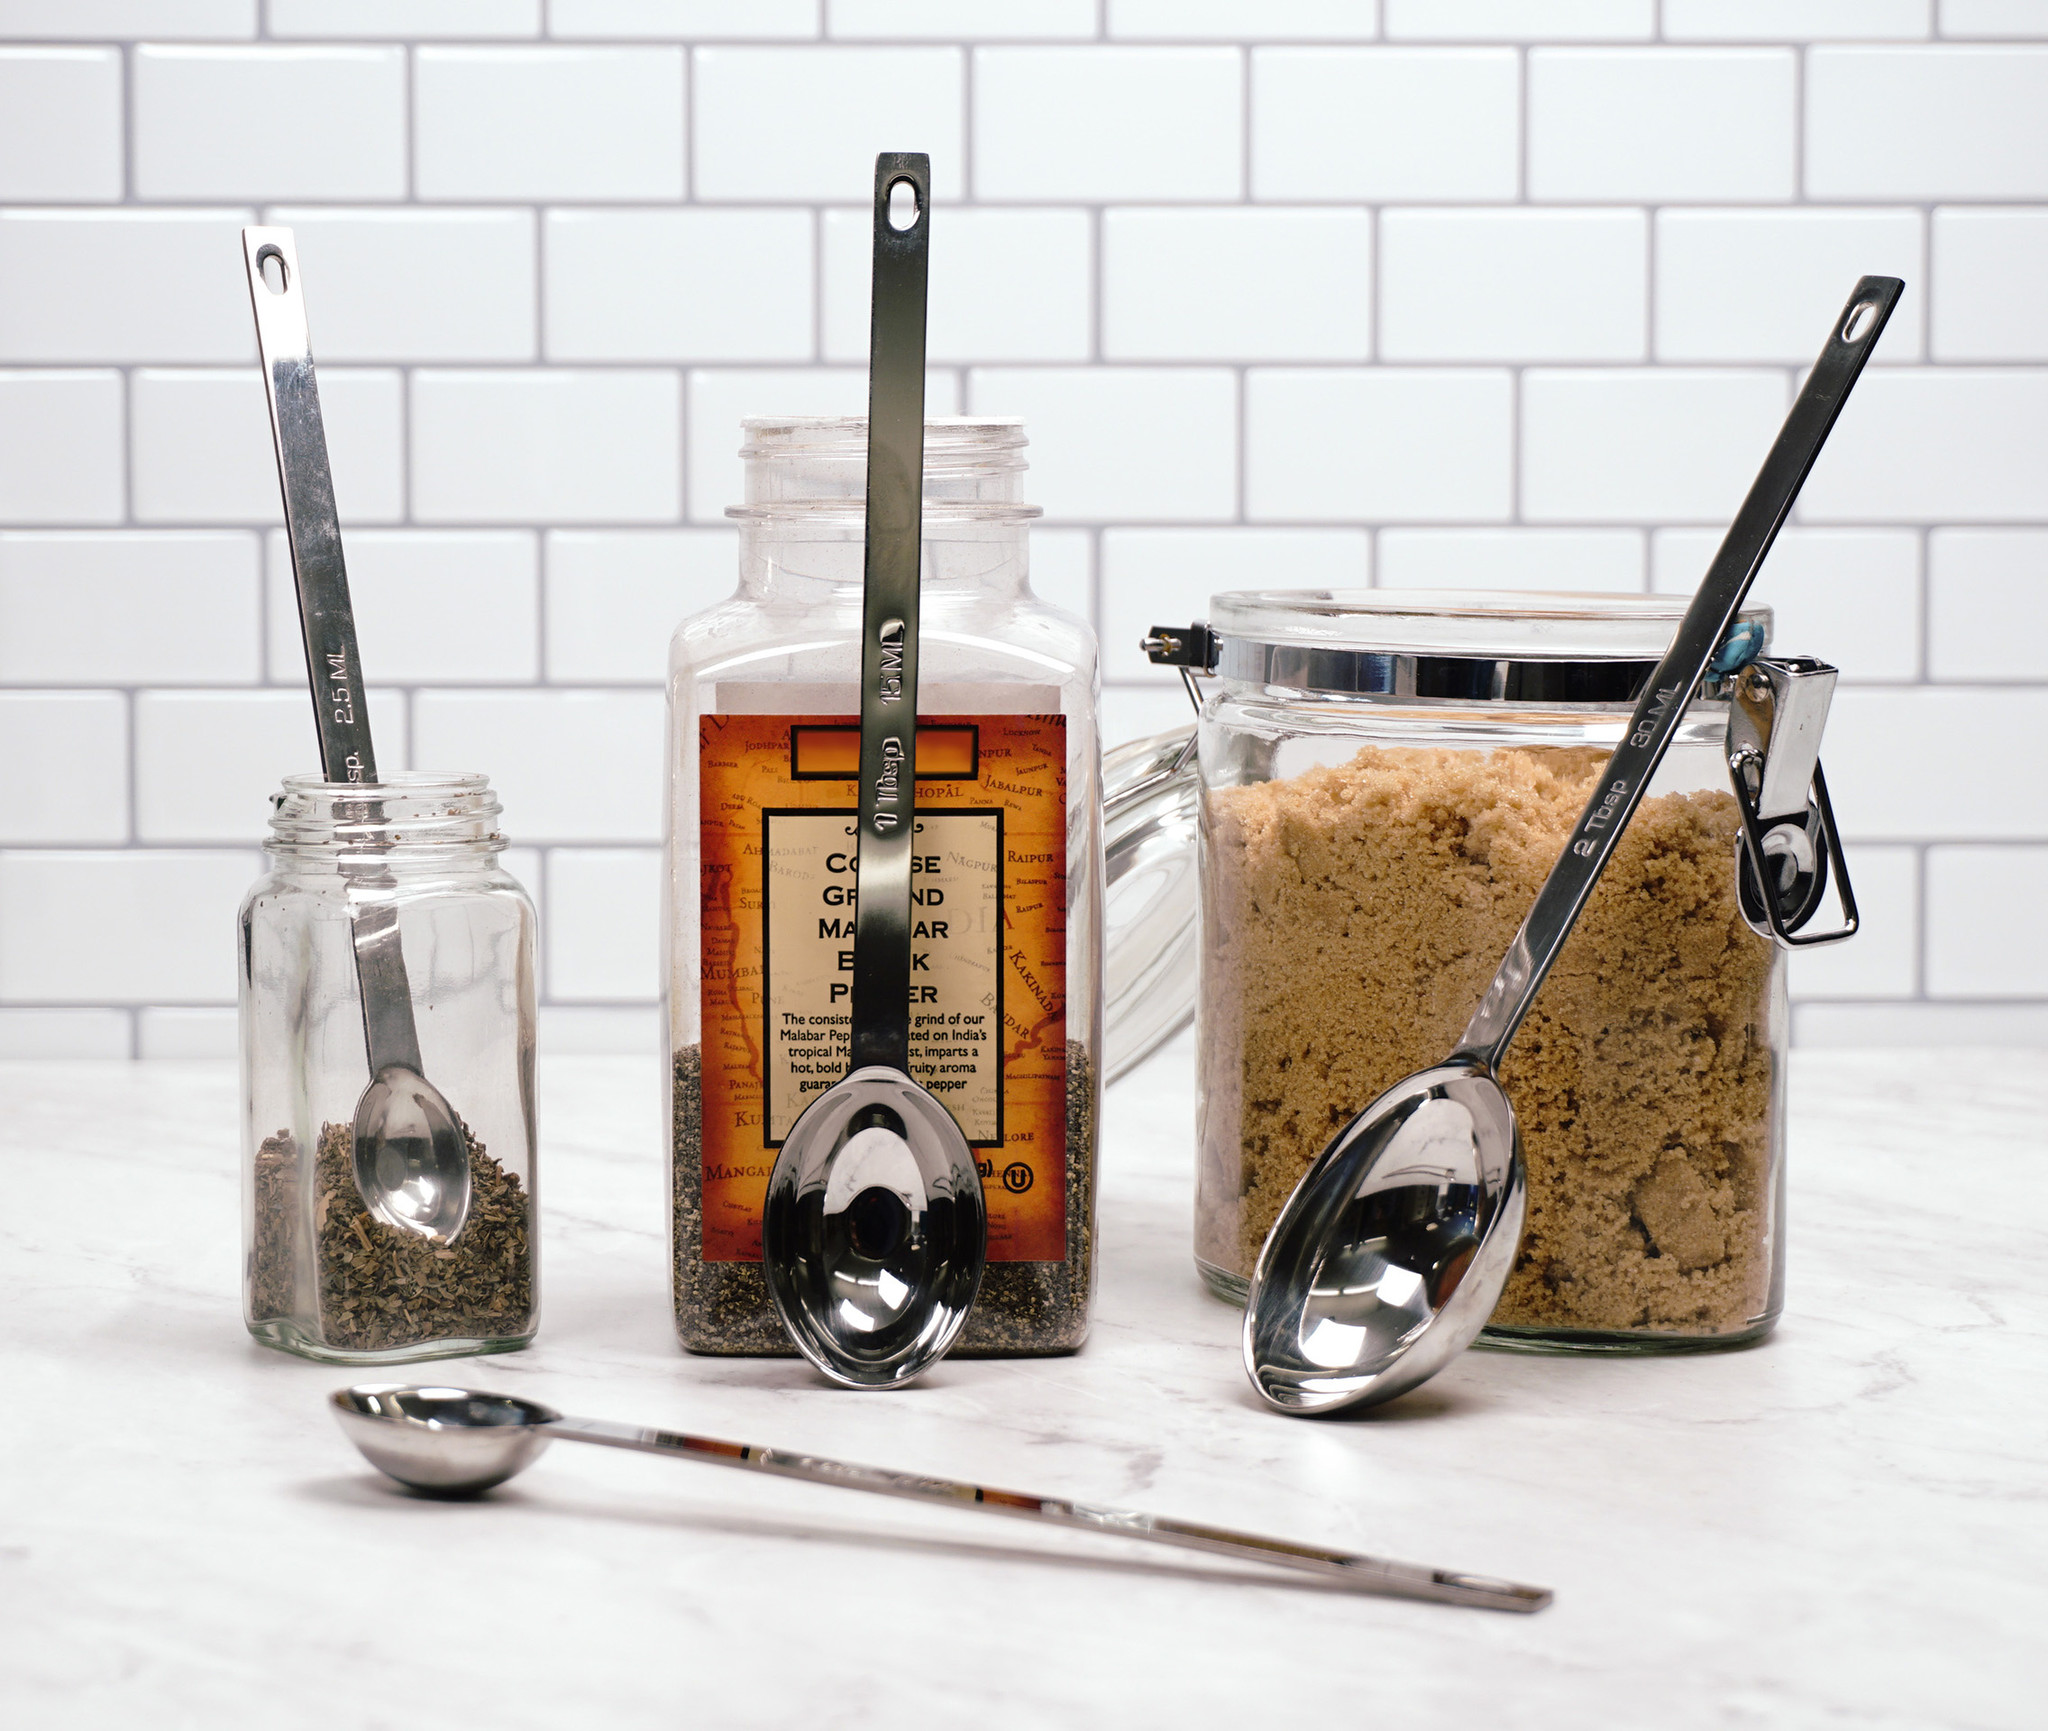 RSVP Endurance Spice Measuring Spoon Set